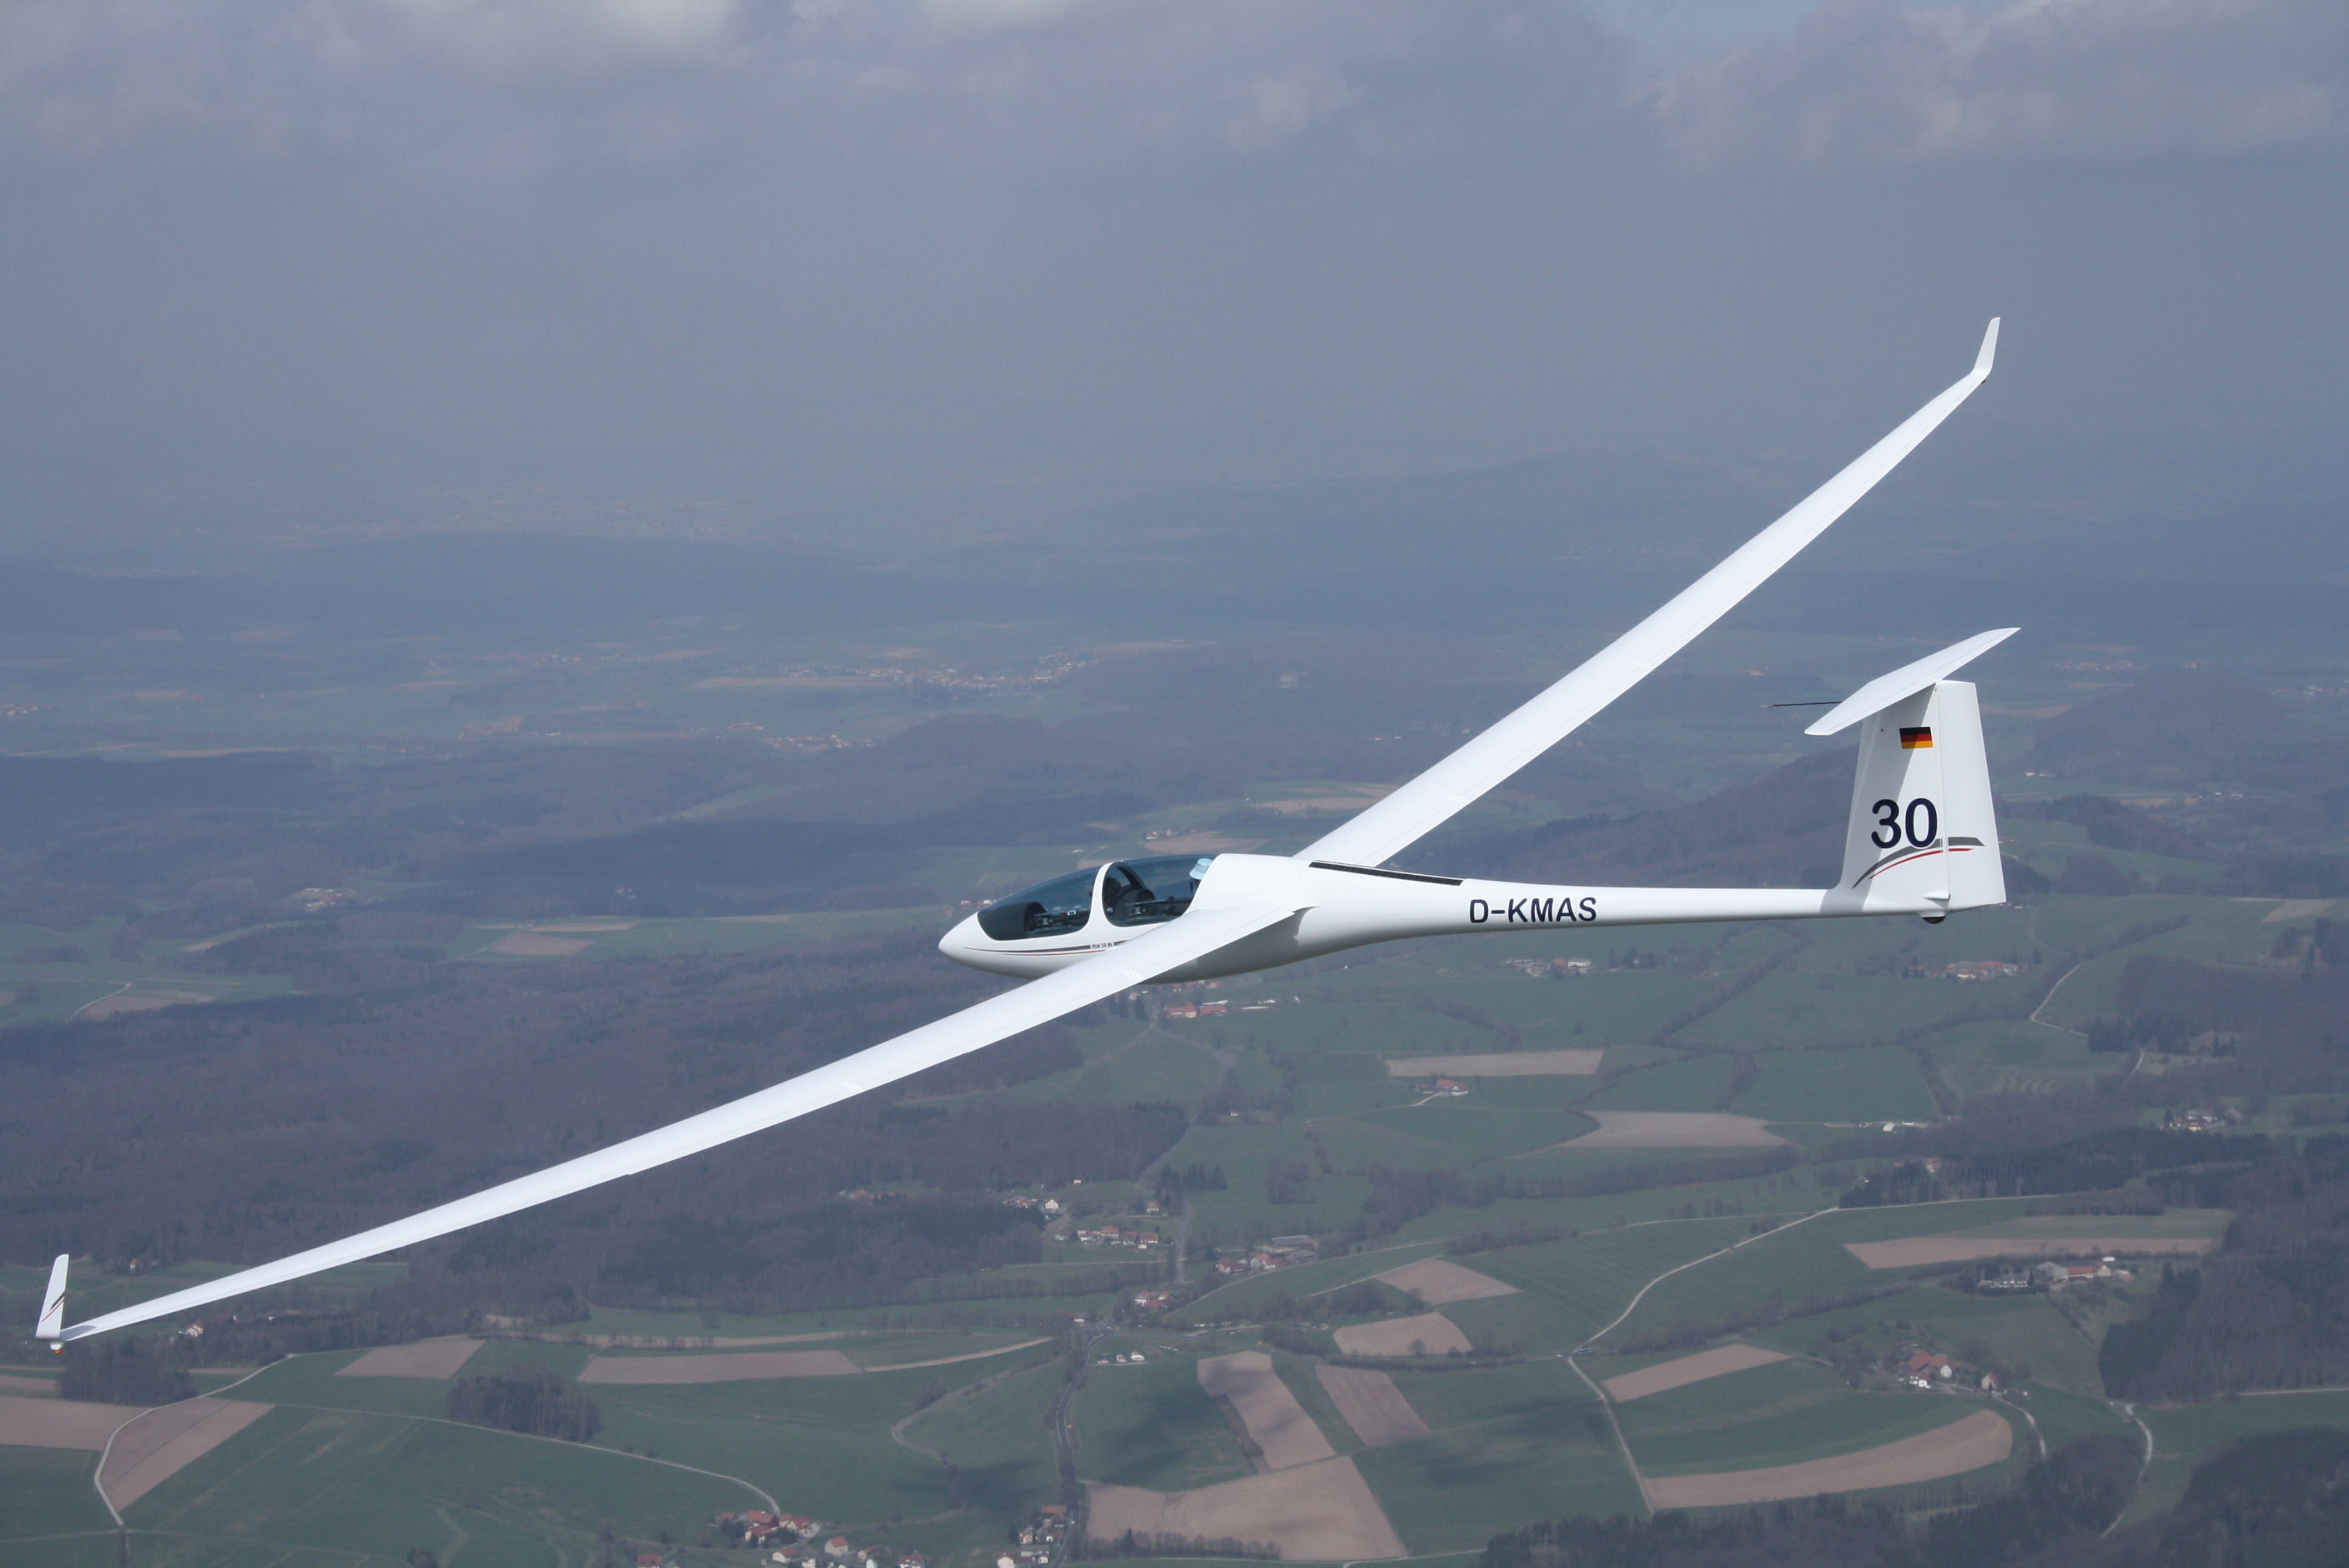 Glider D-KMAS AviationStackexchange